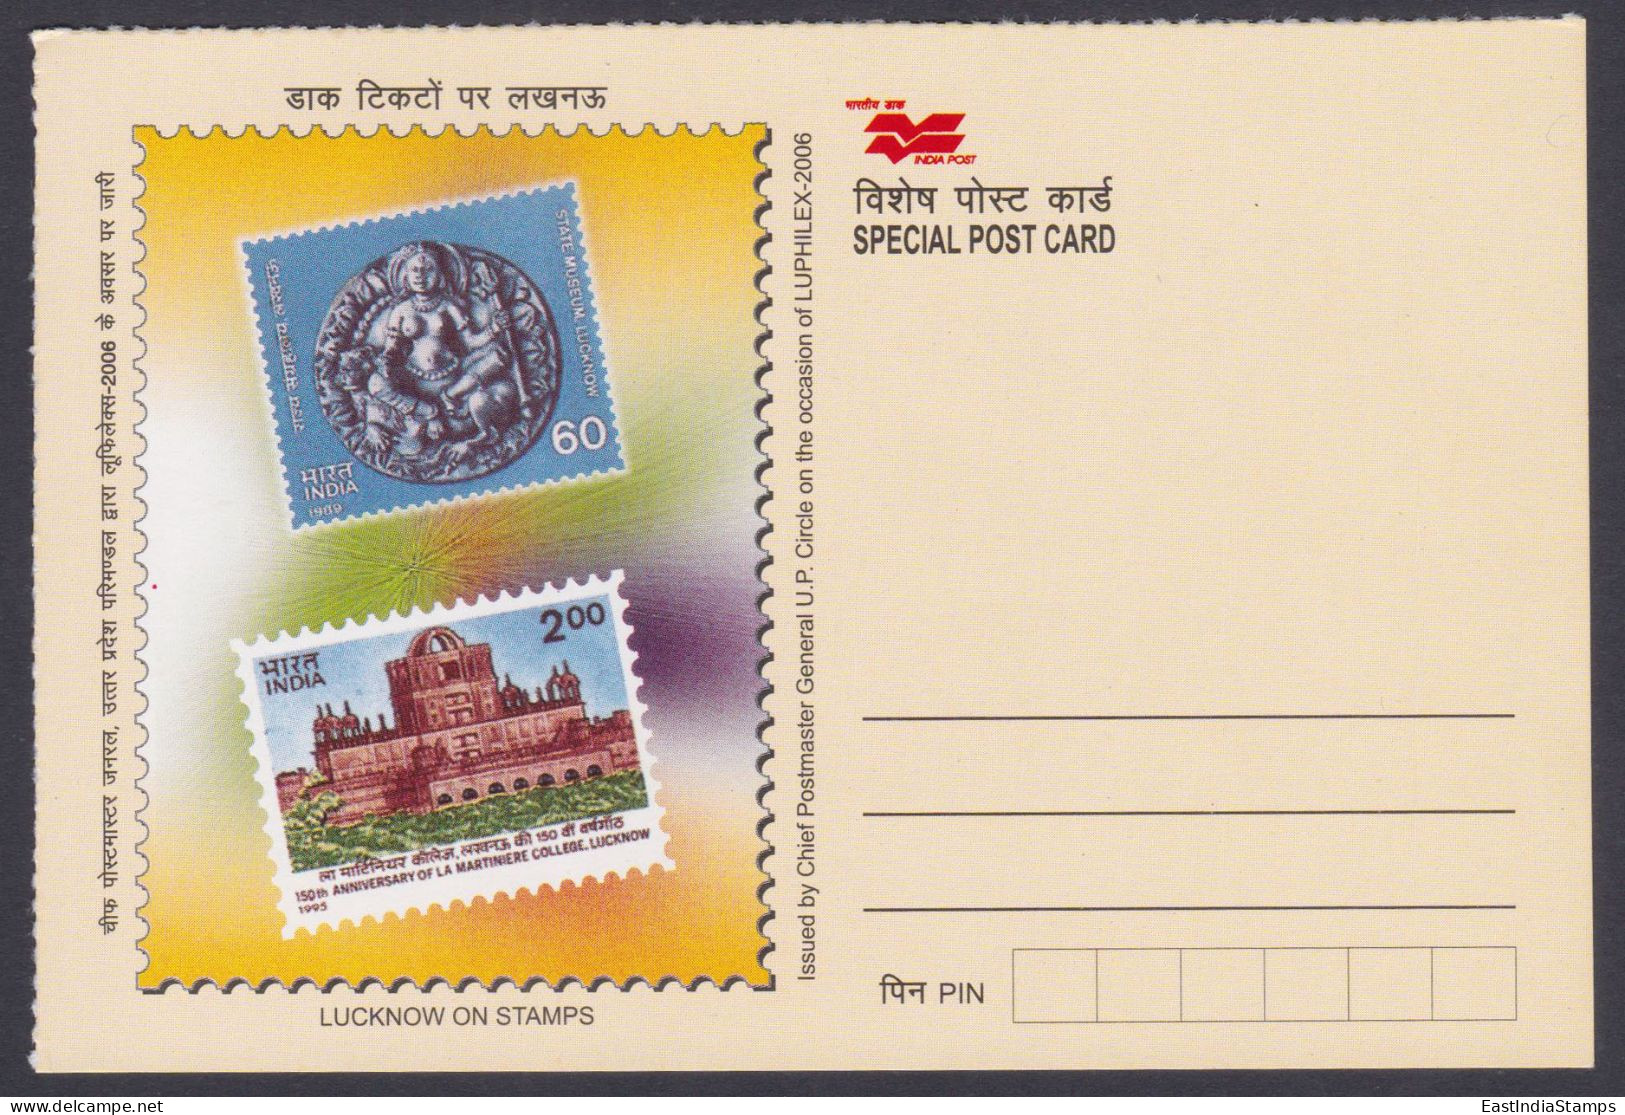 Inde India 2006 Mint Postcard State Museum, Sculpture, La Martinere College, Lucknow, UPhilex Philatelic Exhibition - Inde